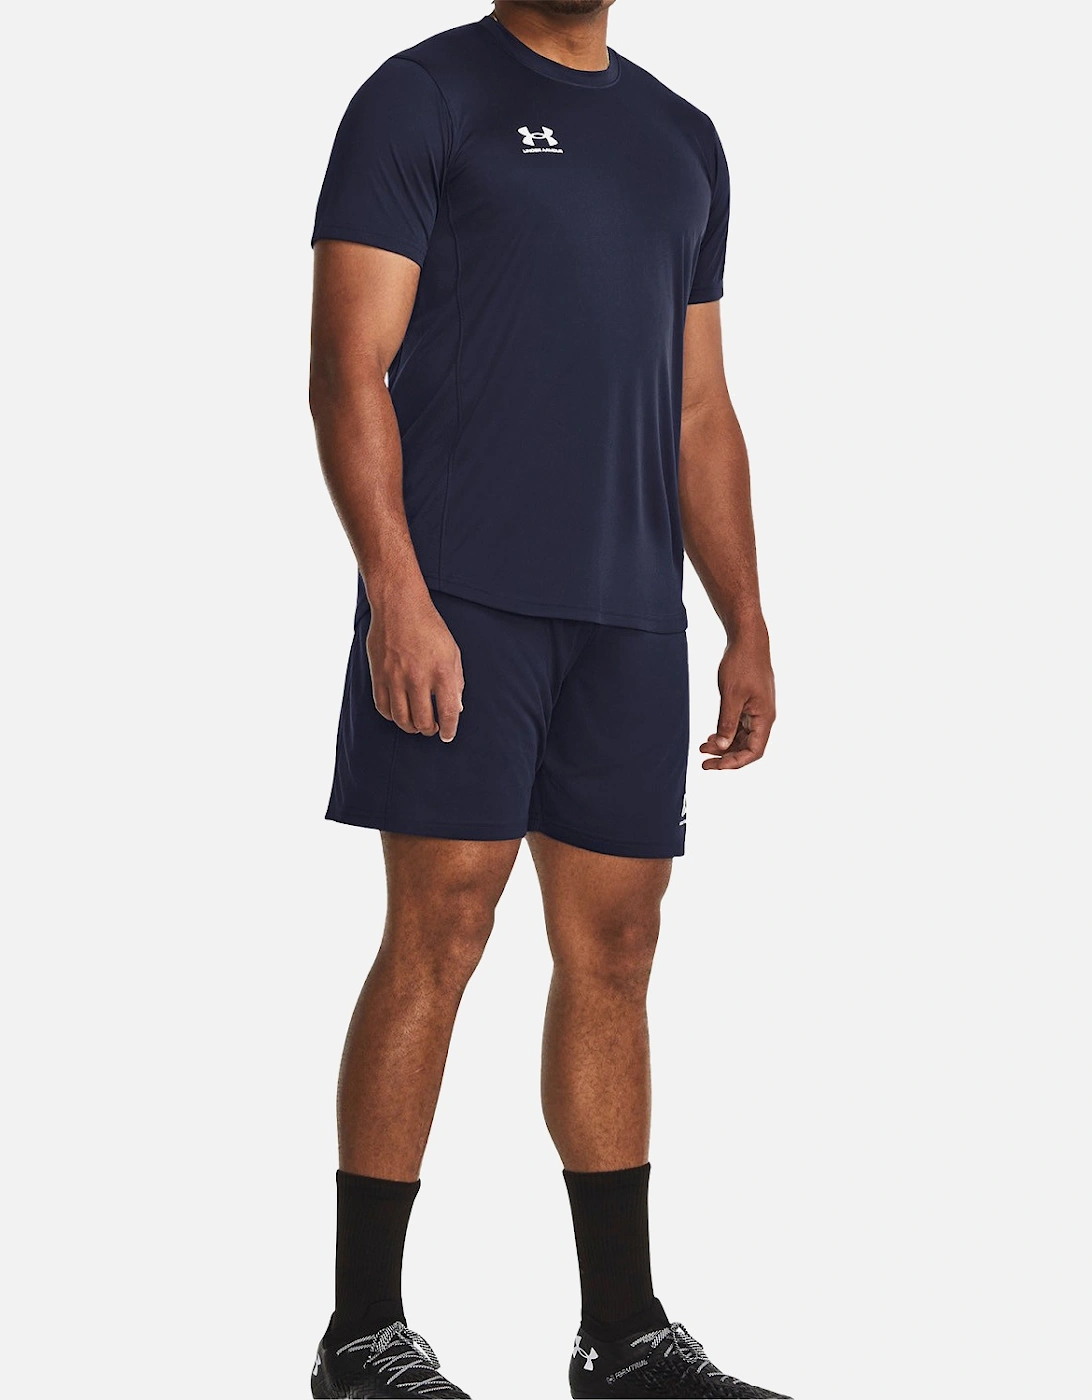 Mens Challenger Knit Shorts (Navy)